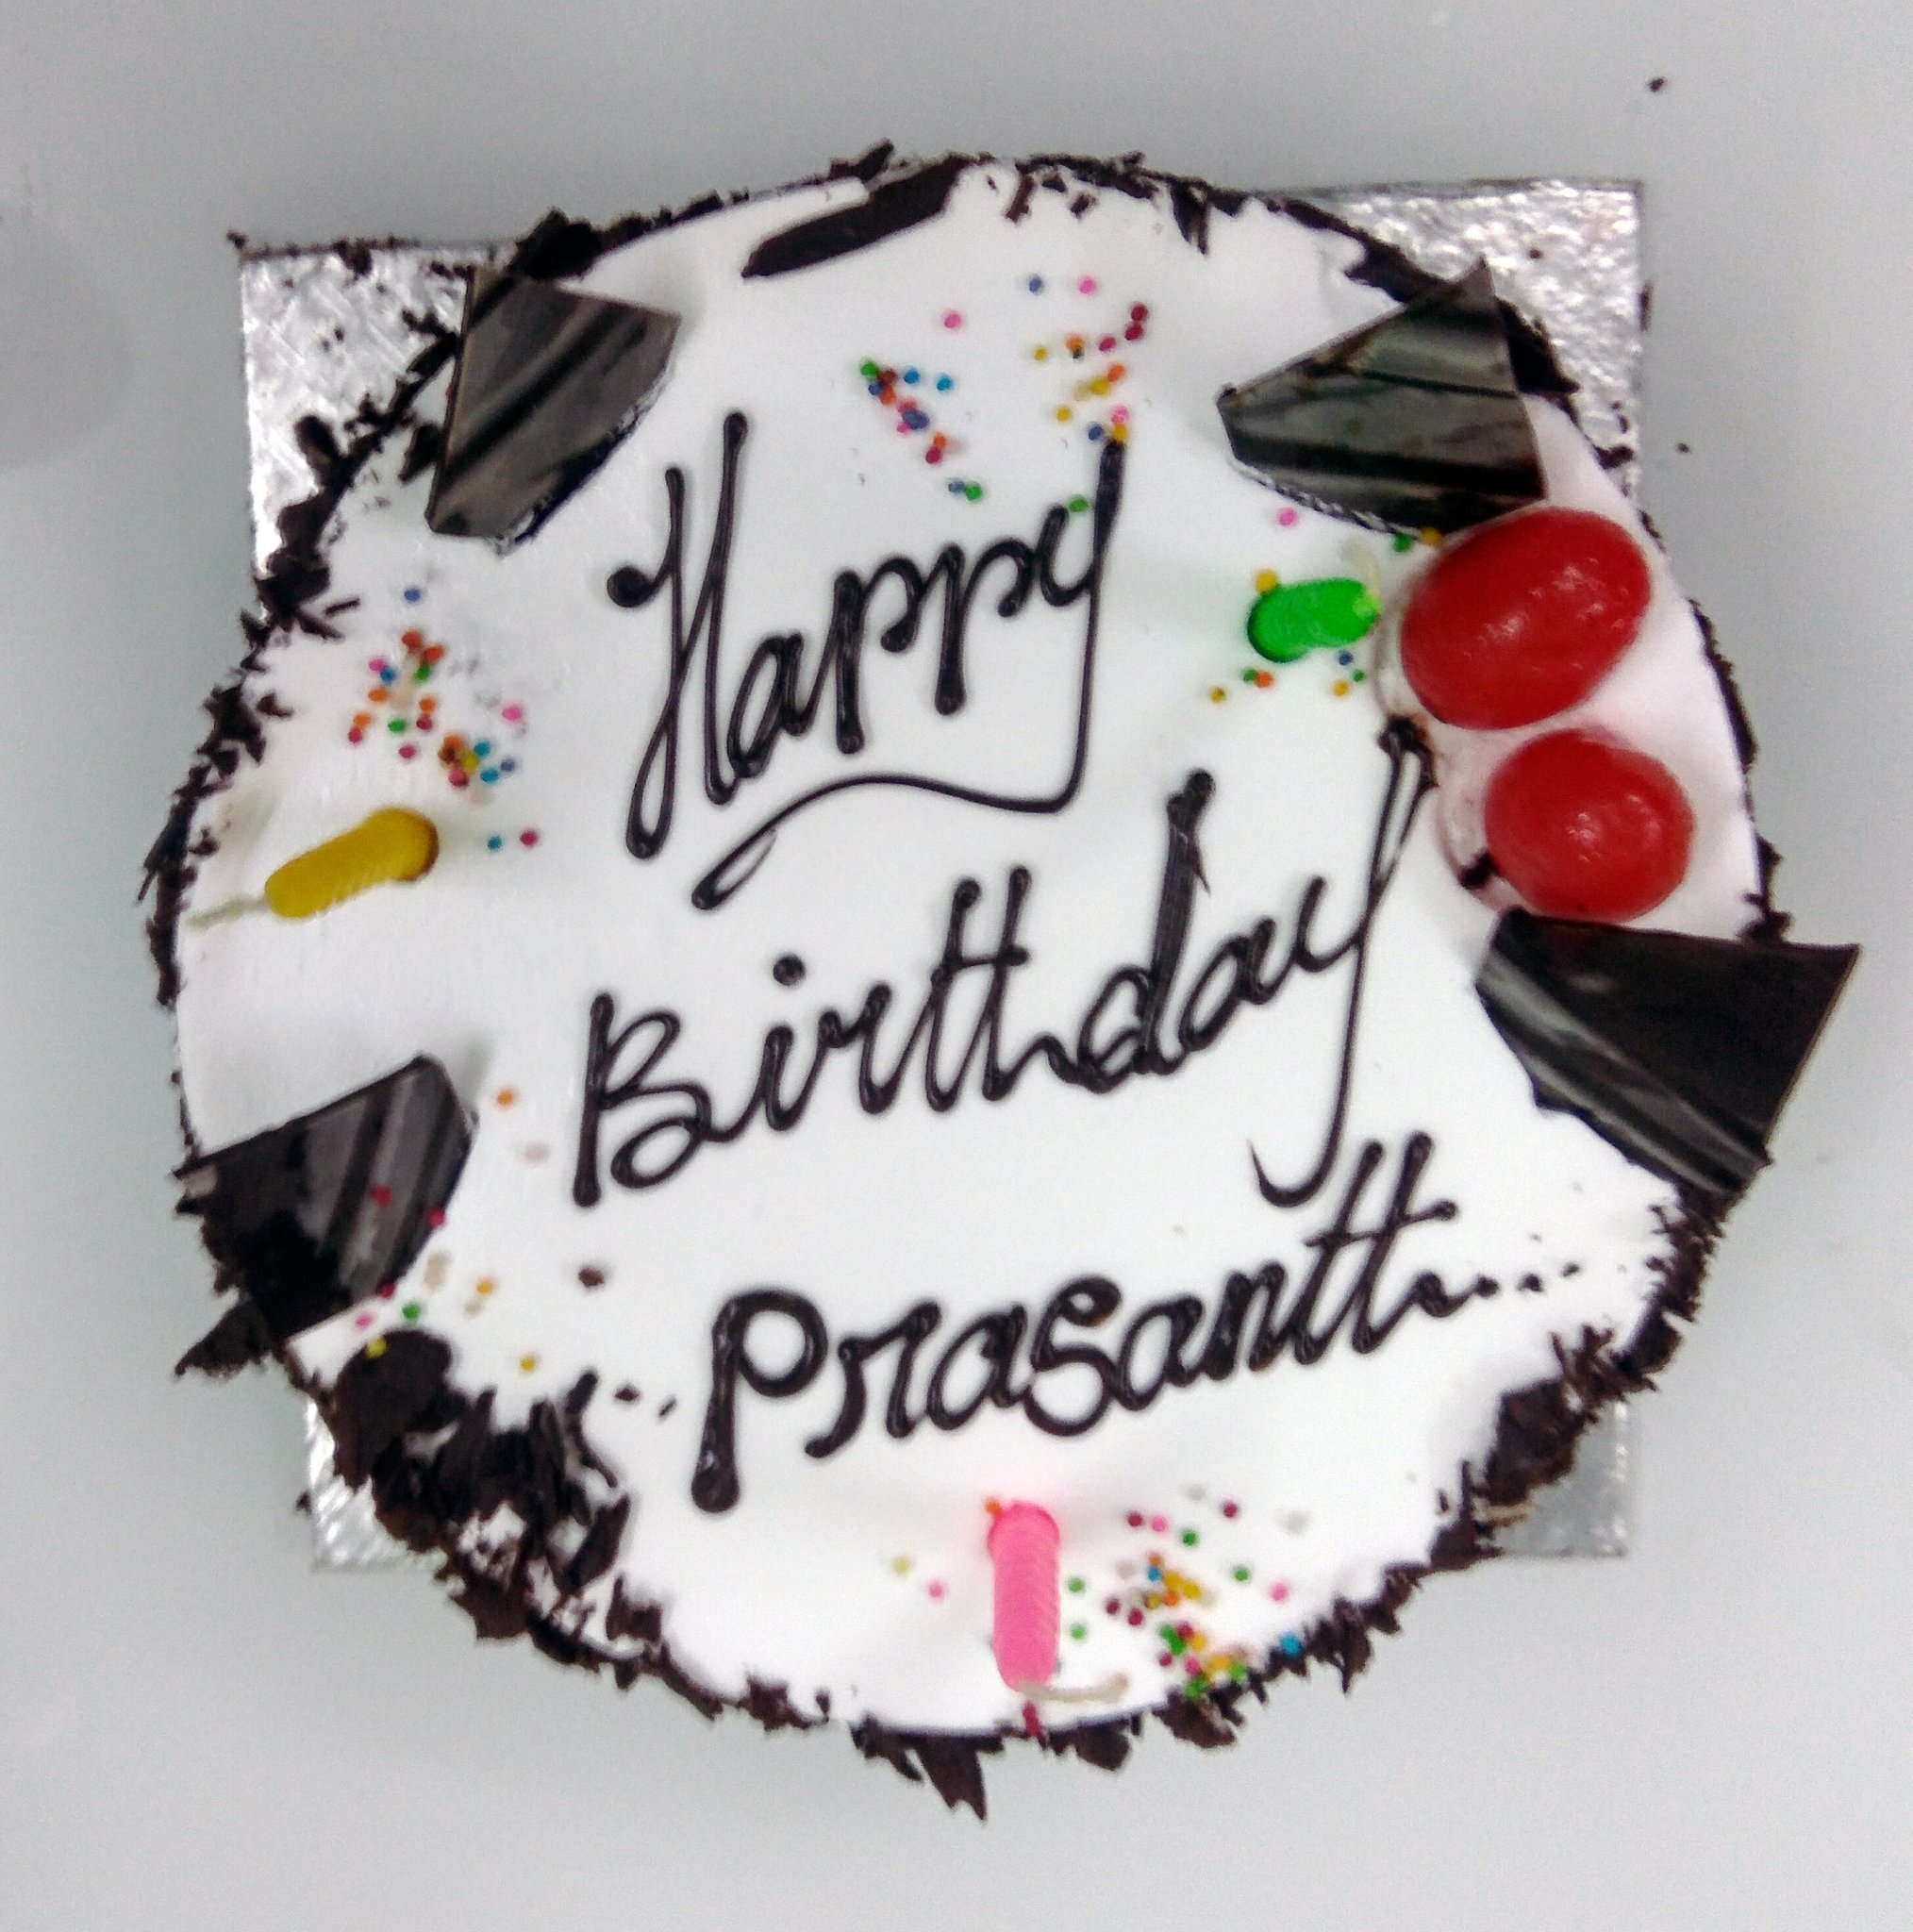 Prashant Birthday Wishes  Cakes  Heart Birthday Cake For Wife With Name  Editing  Birthday cake for wife Happy birthday wishes cake Heart birthday  cake